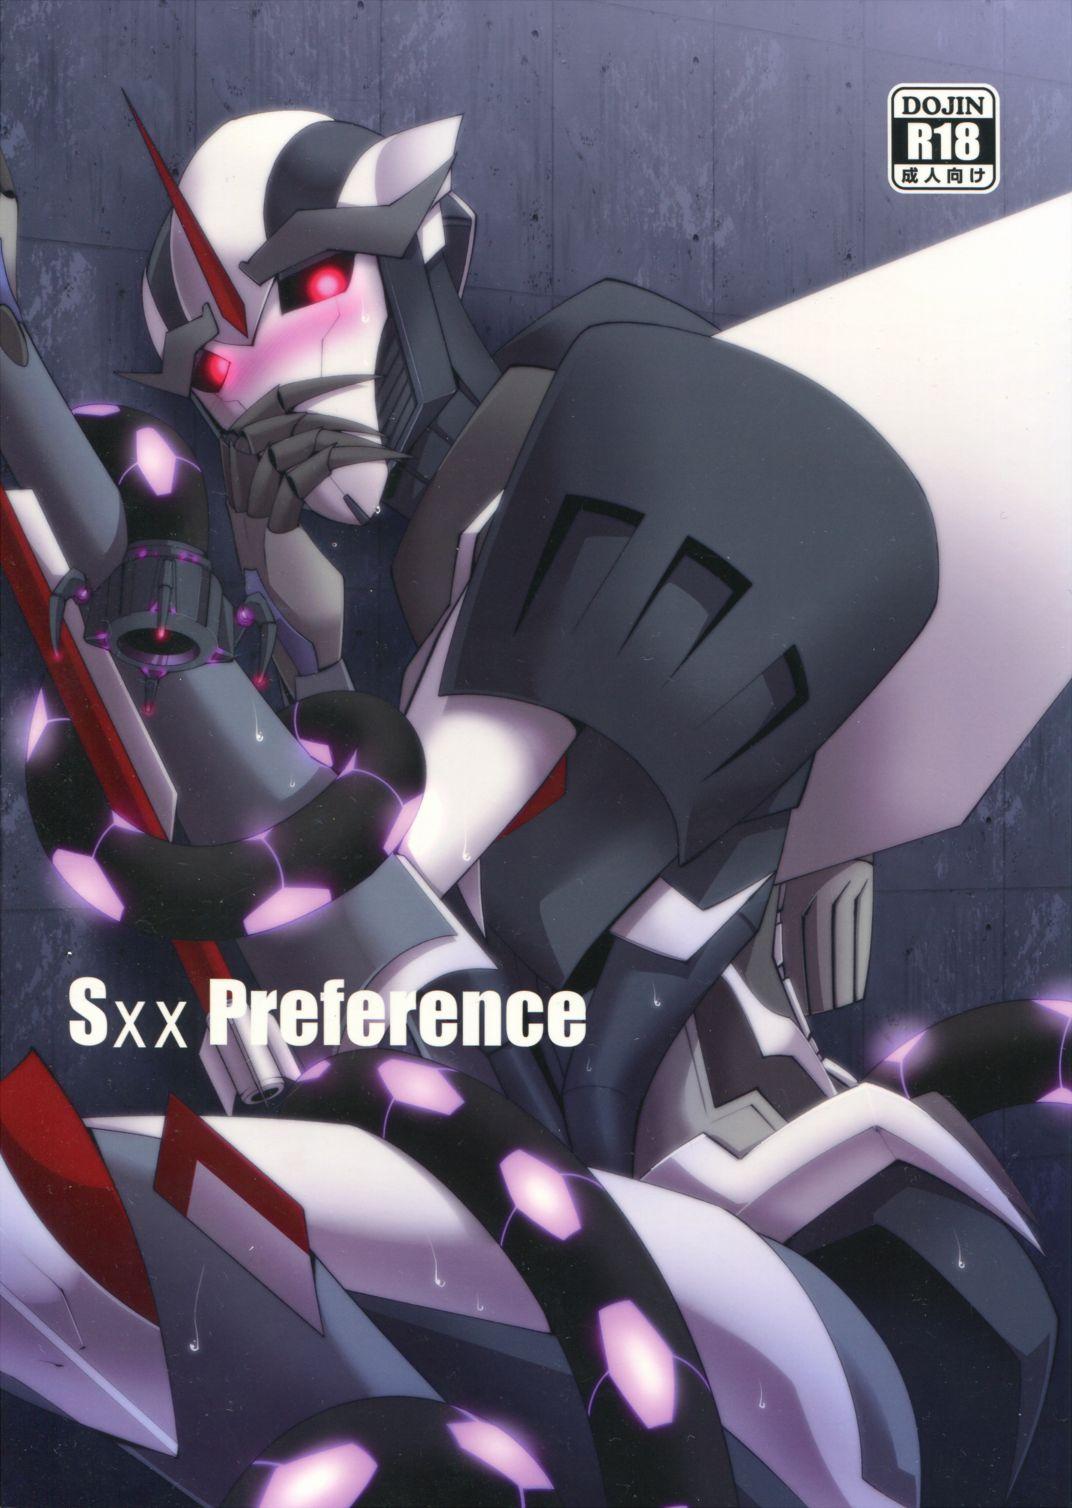 Spy Sxx Preference - Transformers Danish - Picture 1